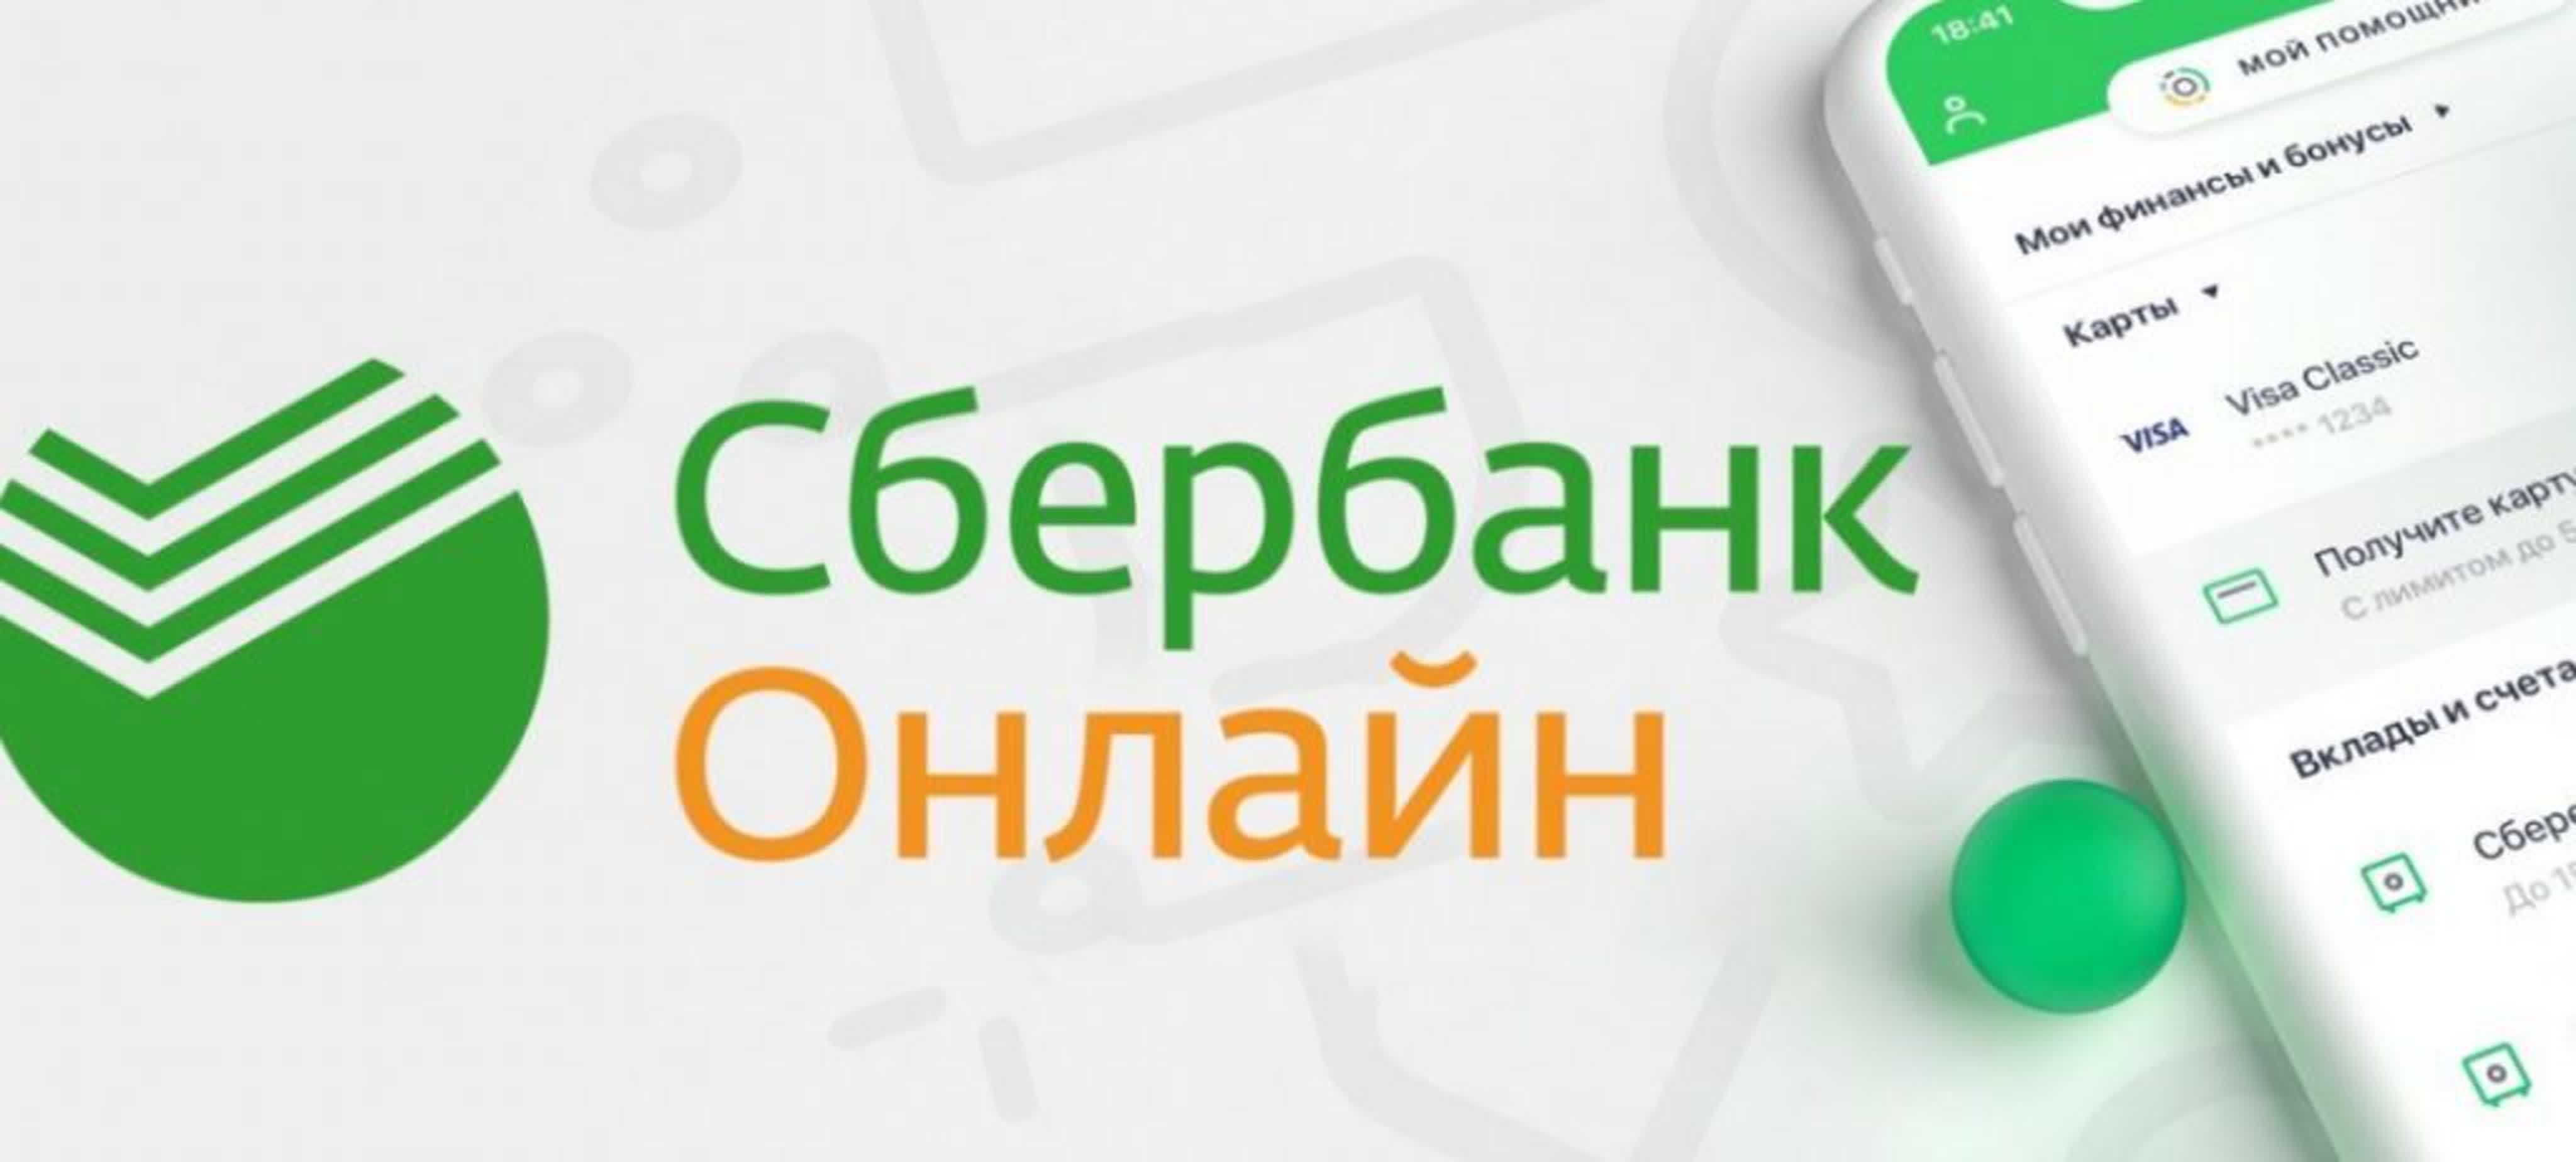 Sberbank ru download